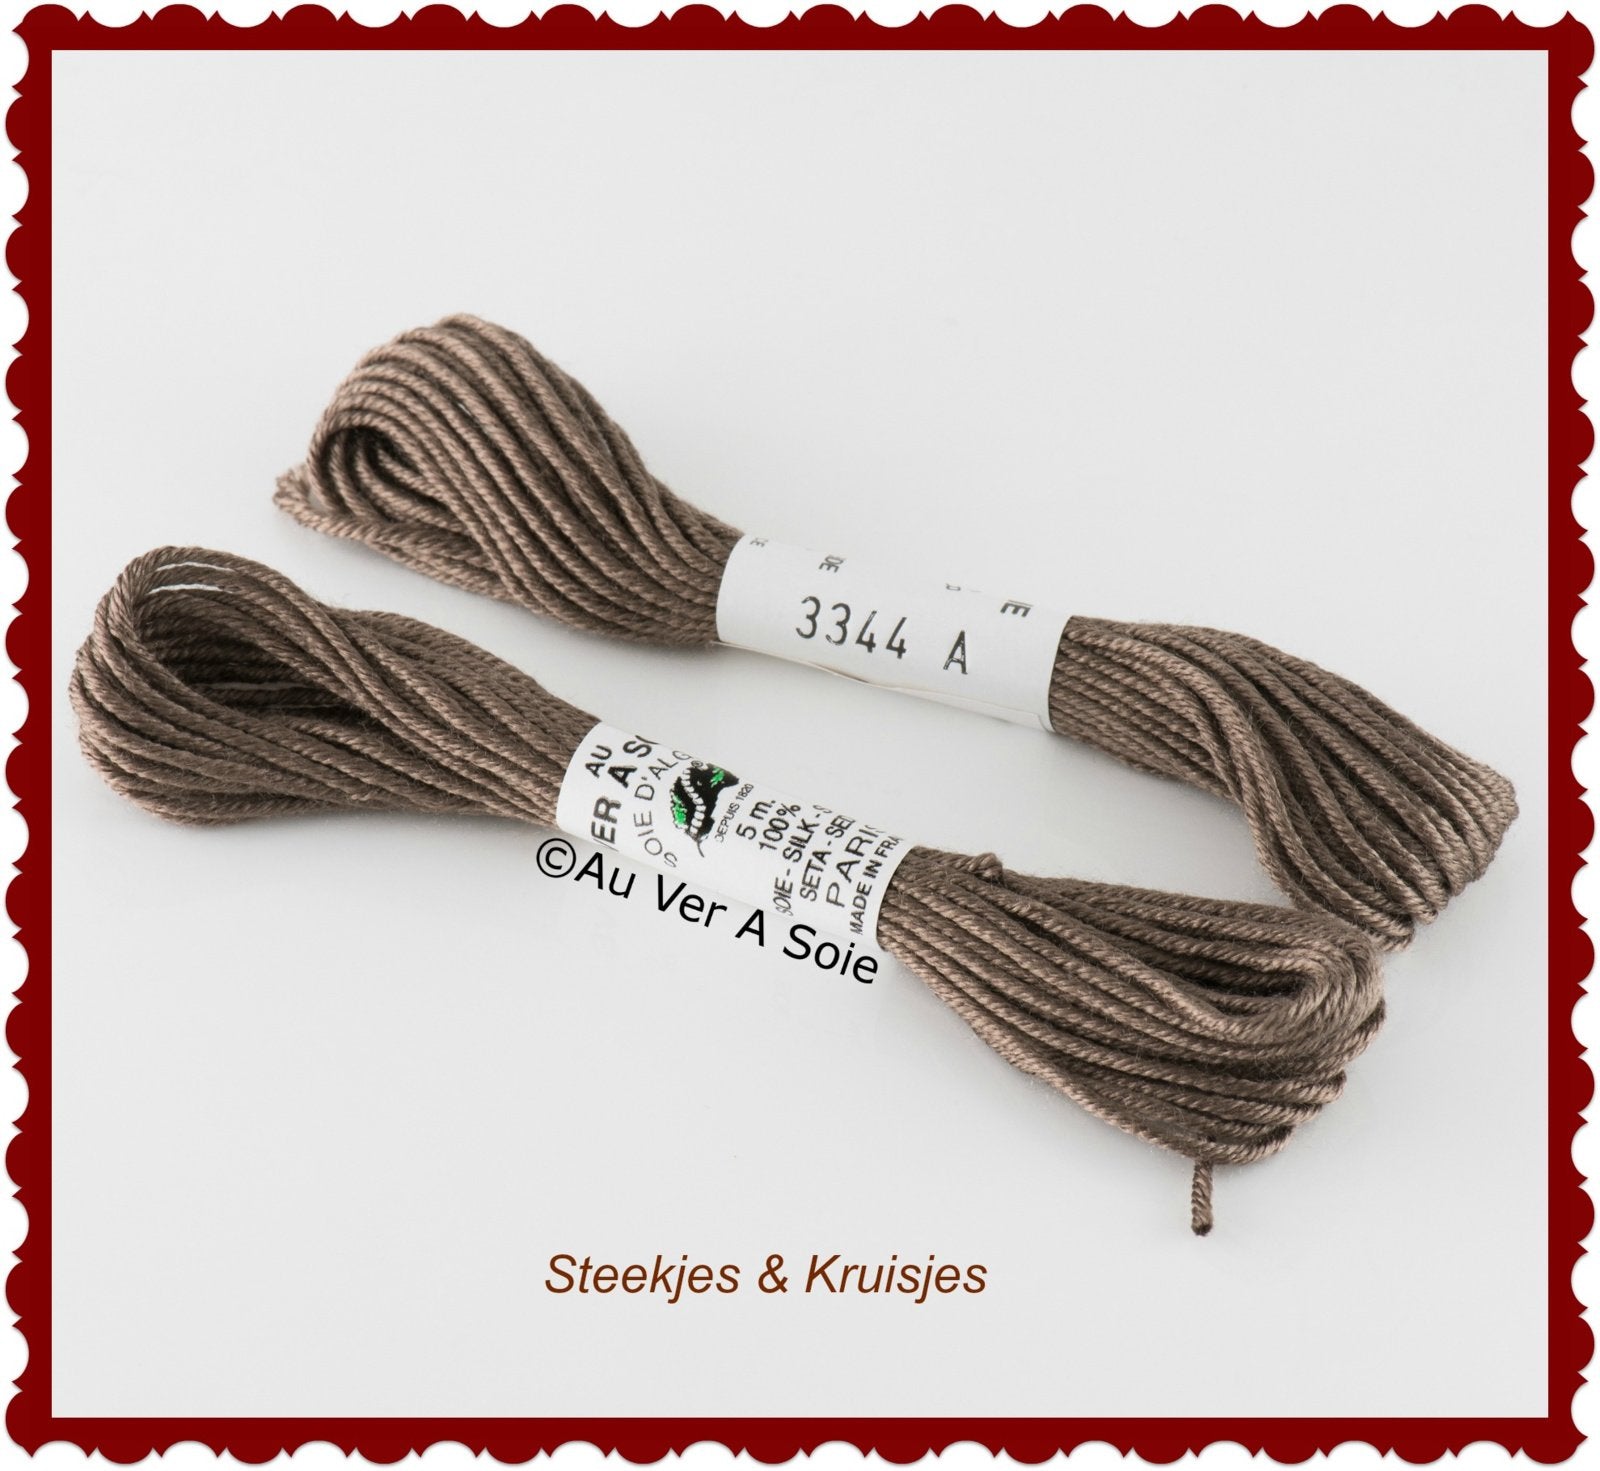 Au ver ie "soie d'alger" silk yarn color no. 3344